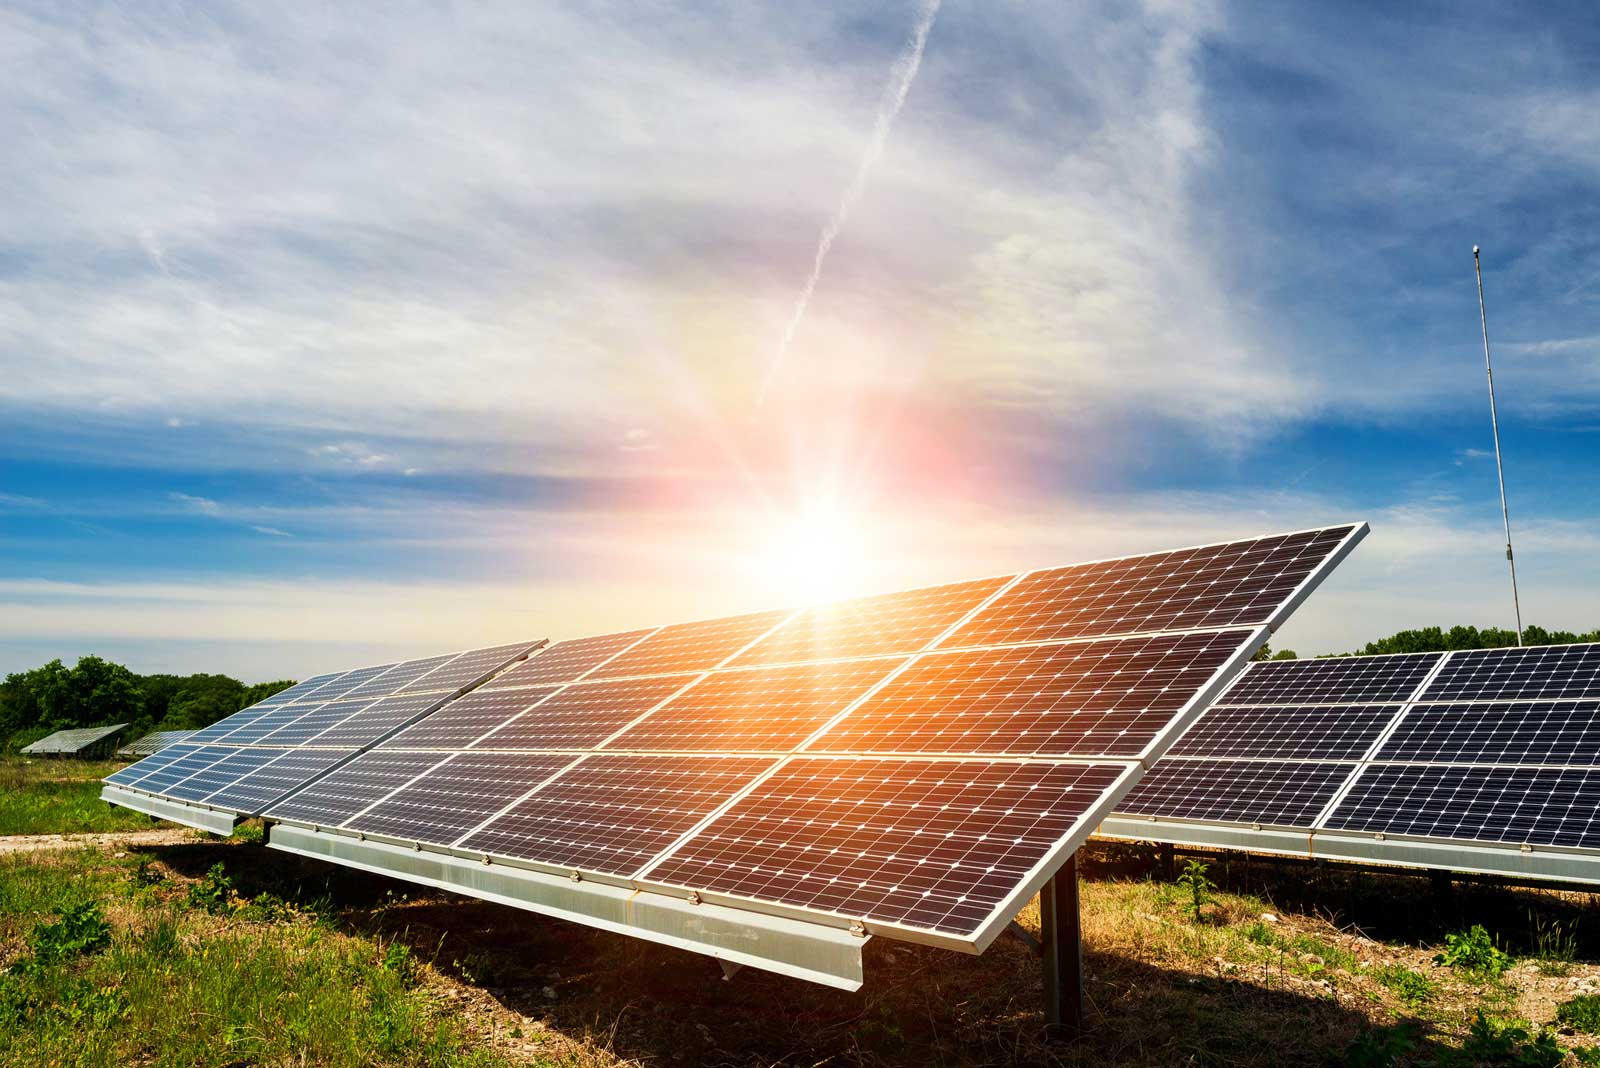 Solar farm leasing – a new opportunity for landowners